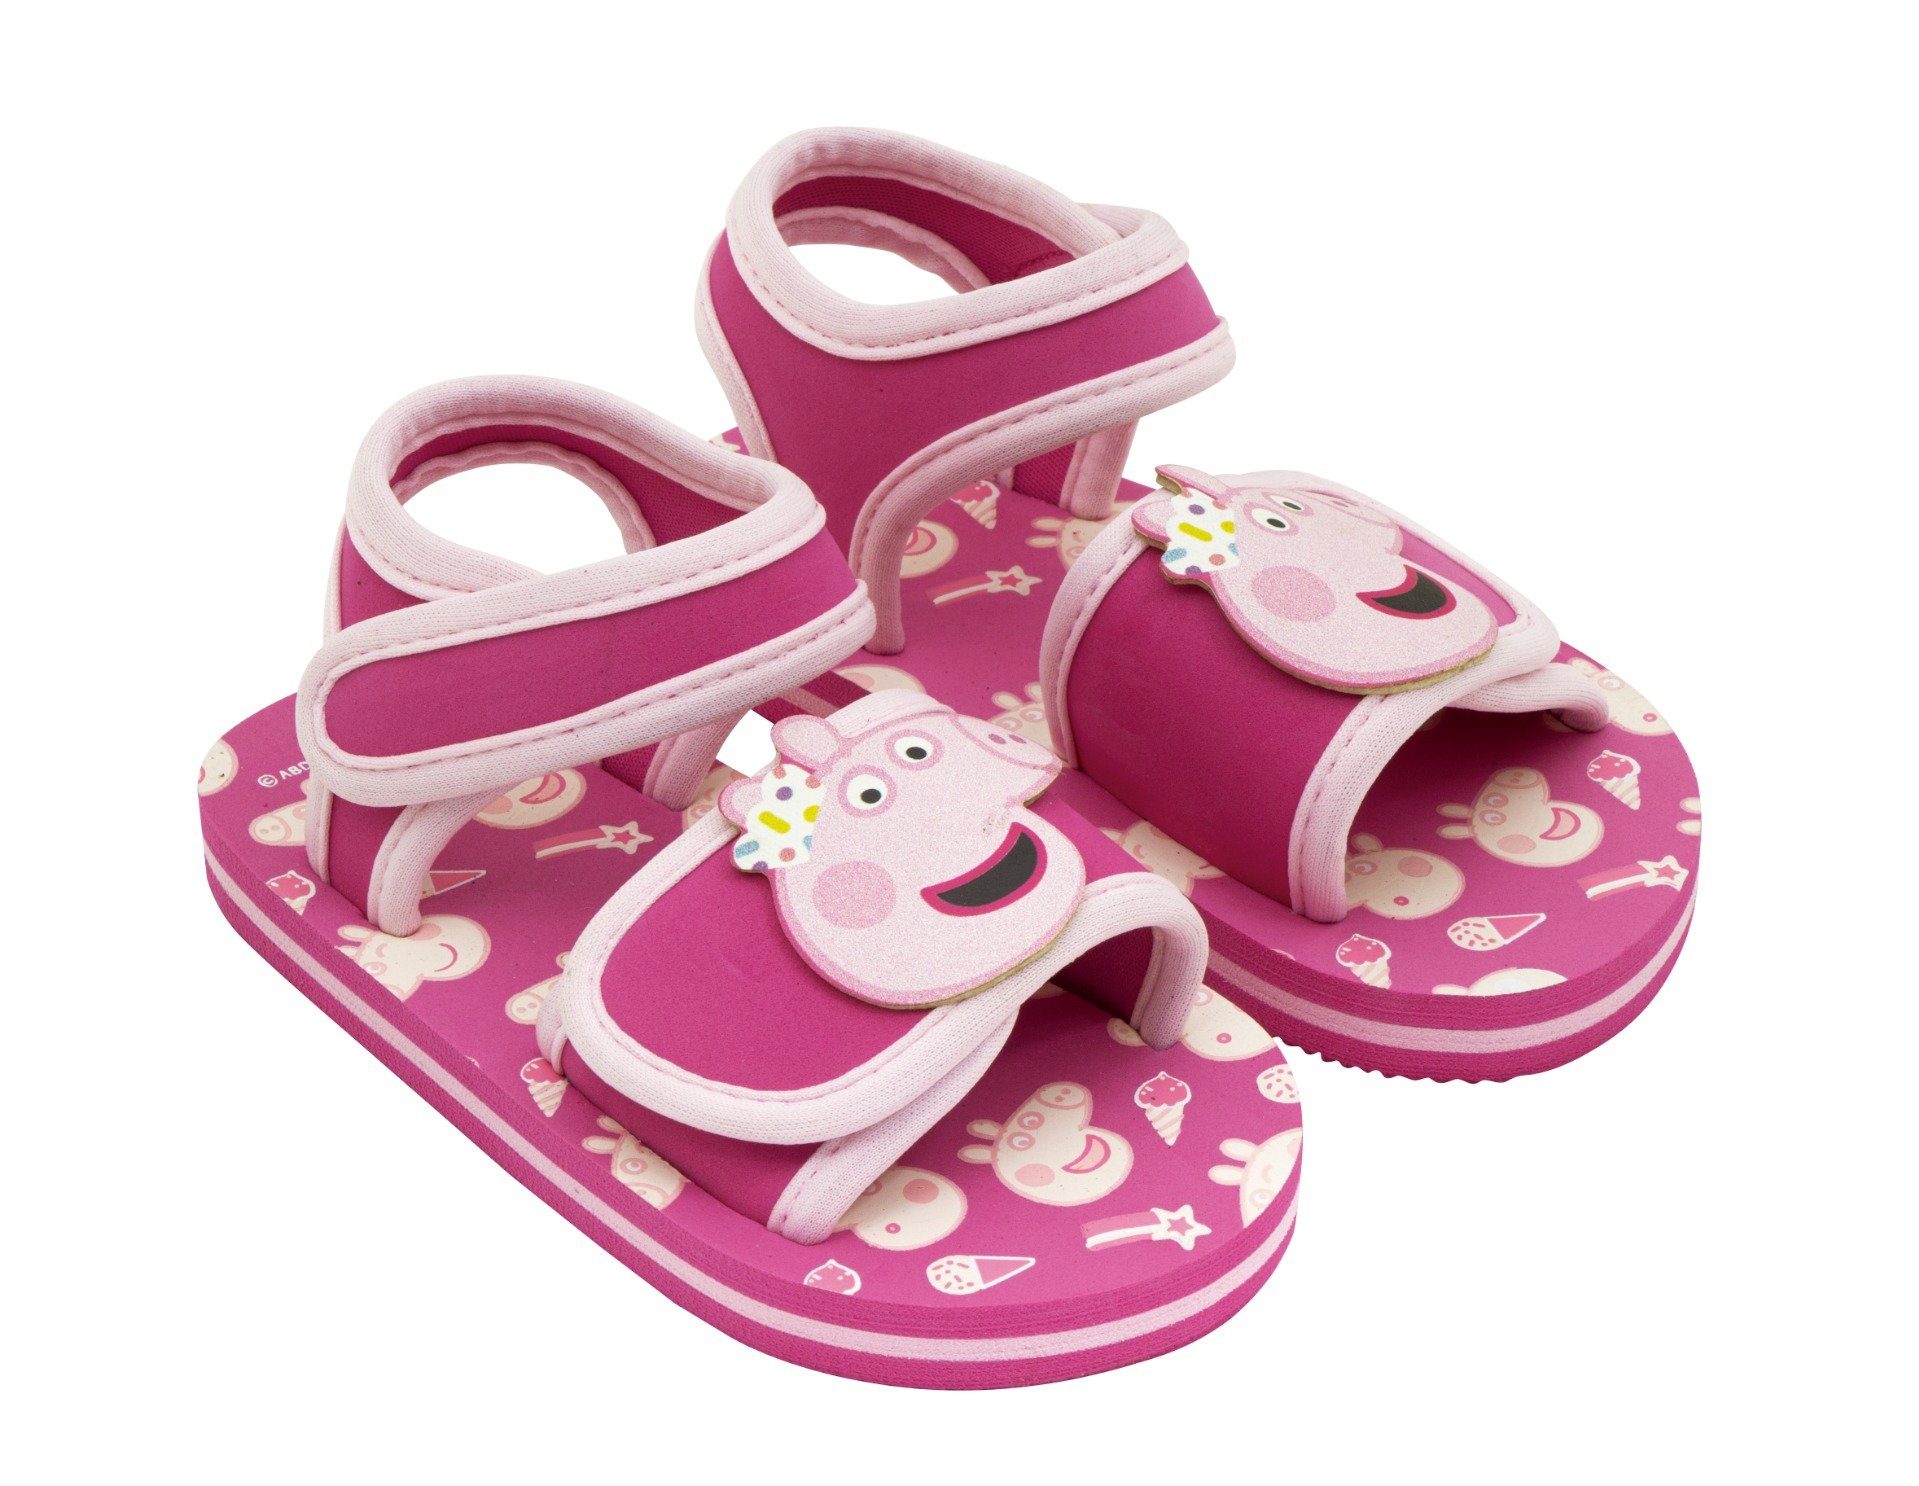 Peppa Pig Peppa Wutz 22 Sandalen 28 Sandale Gr. bis Mädchen Sommerschuhe Kinder